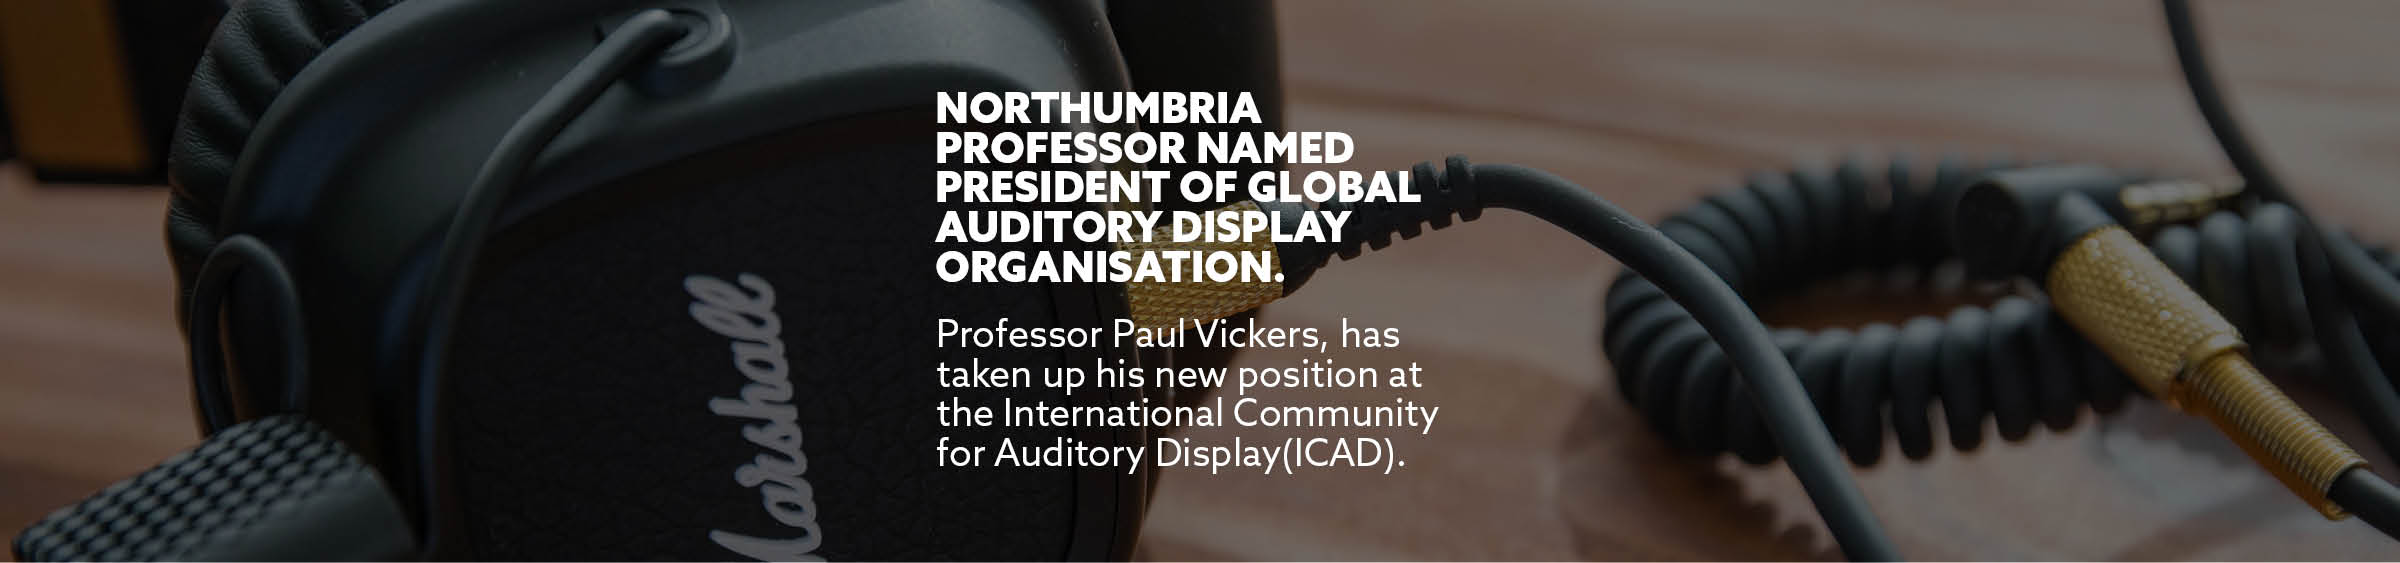 Northumbria Uni Professor President Auditory Display Organisation